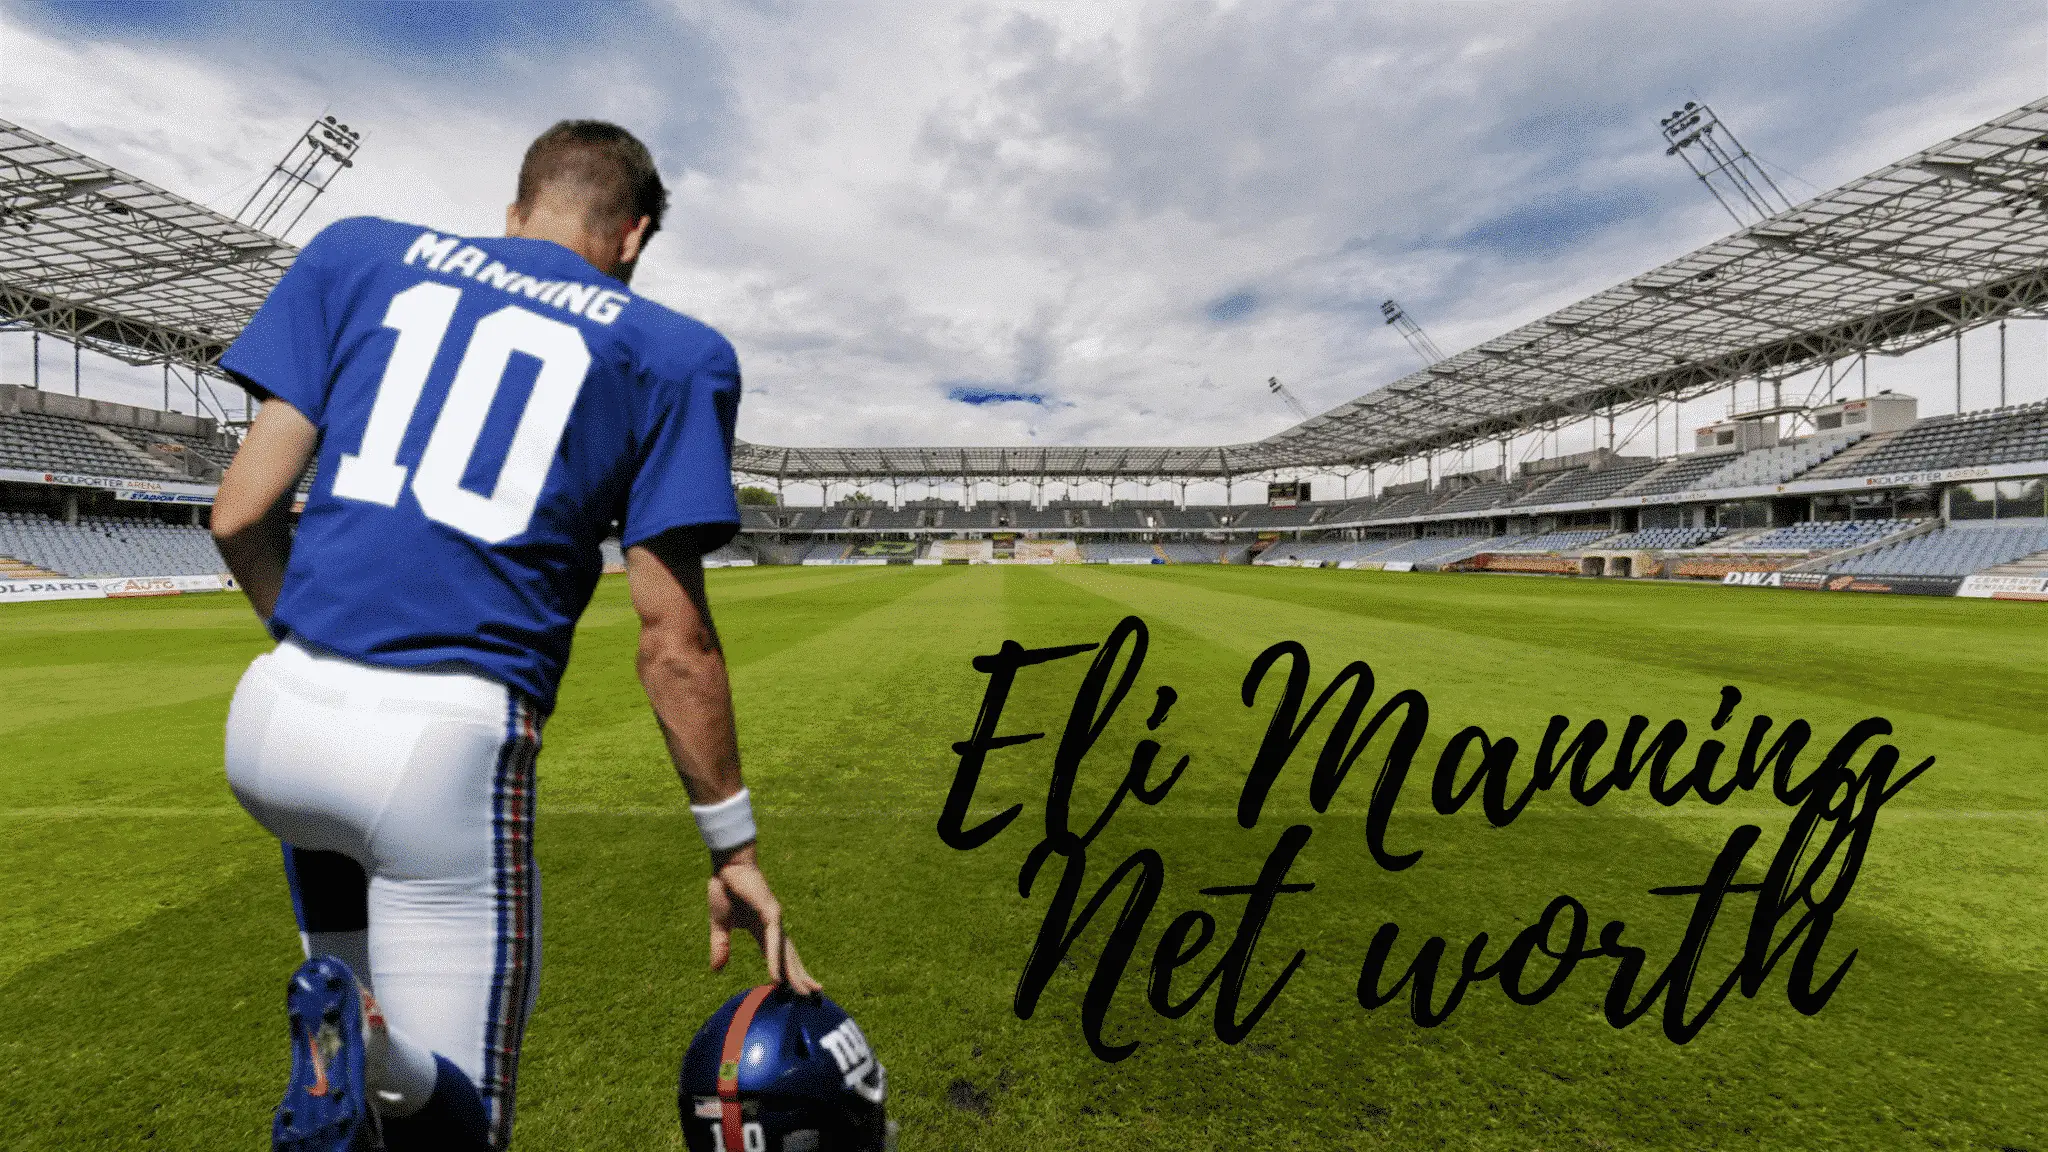 Eli Manning Net worth – Fortune of American Football Quarterback